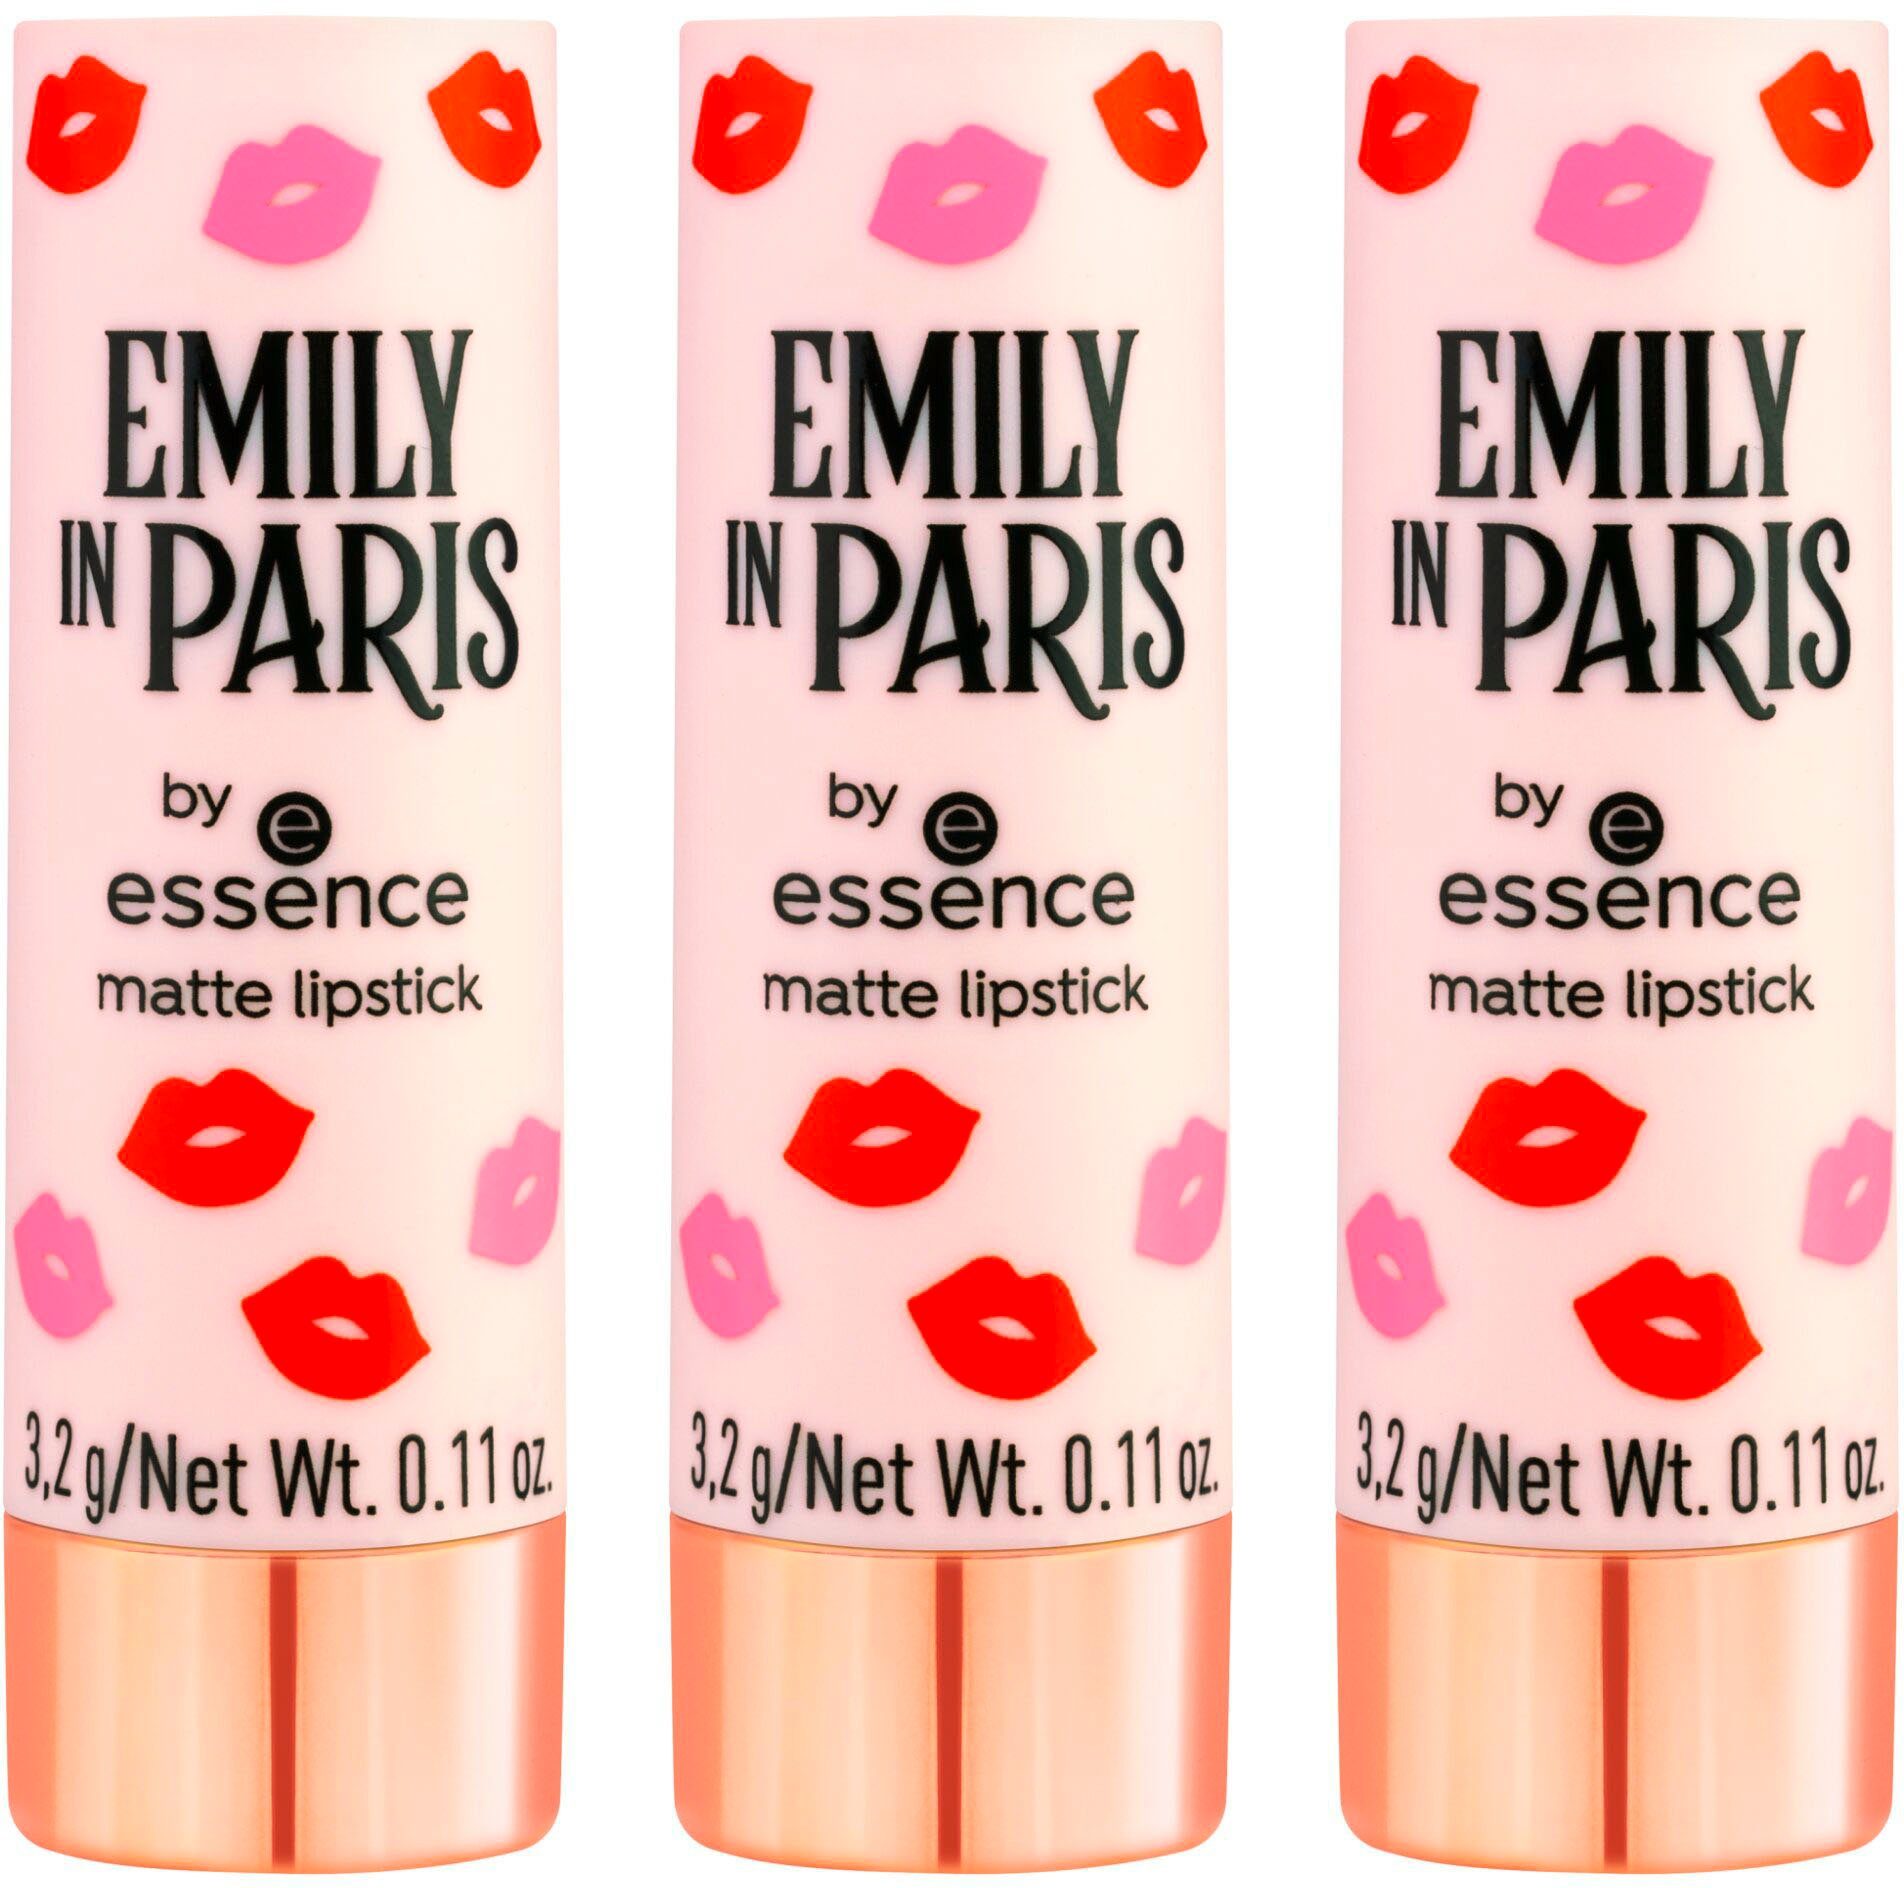 Essence Lippenstift EMILY IN PARIS by essence matte lipstick